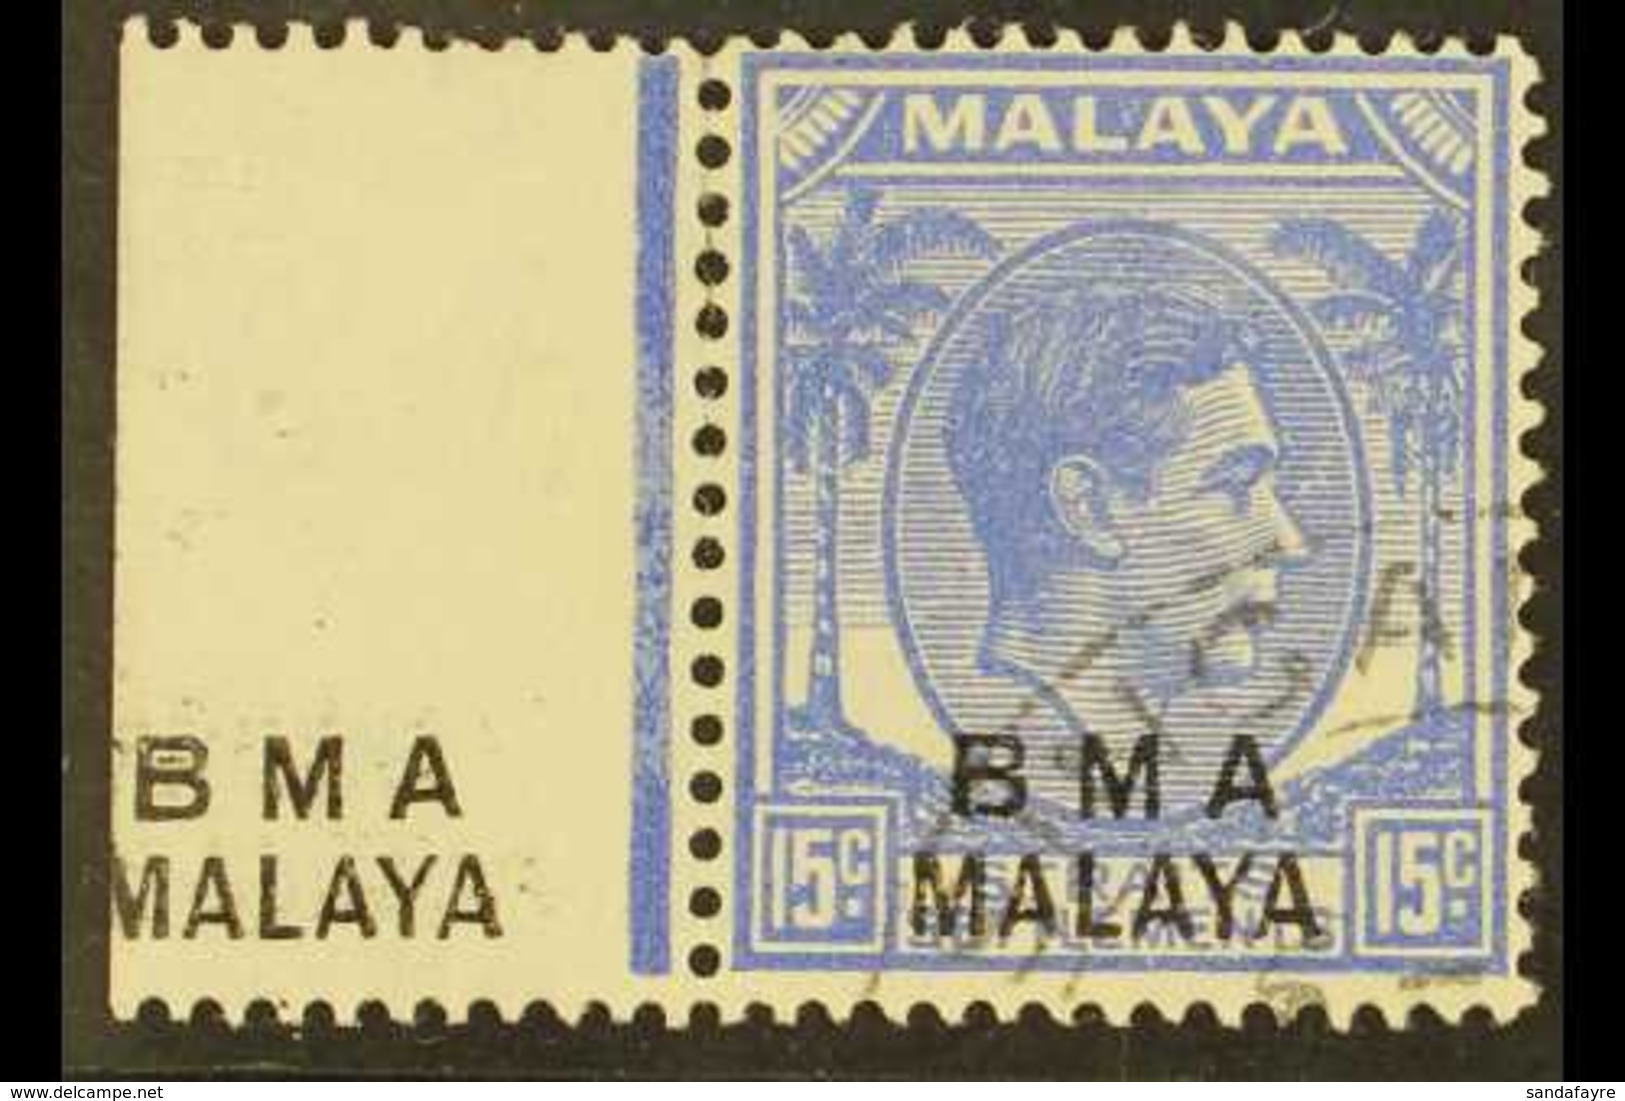 MALAYA BMA - Malaya (British Military Administration)